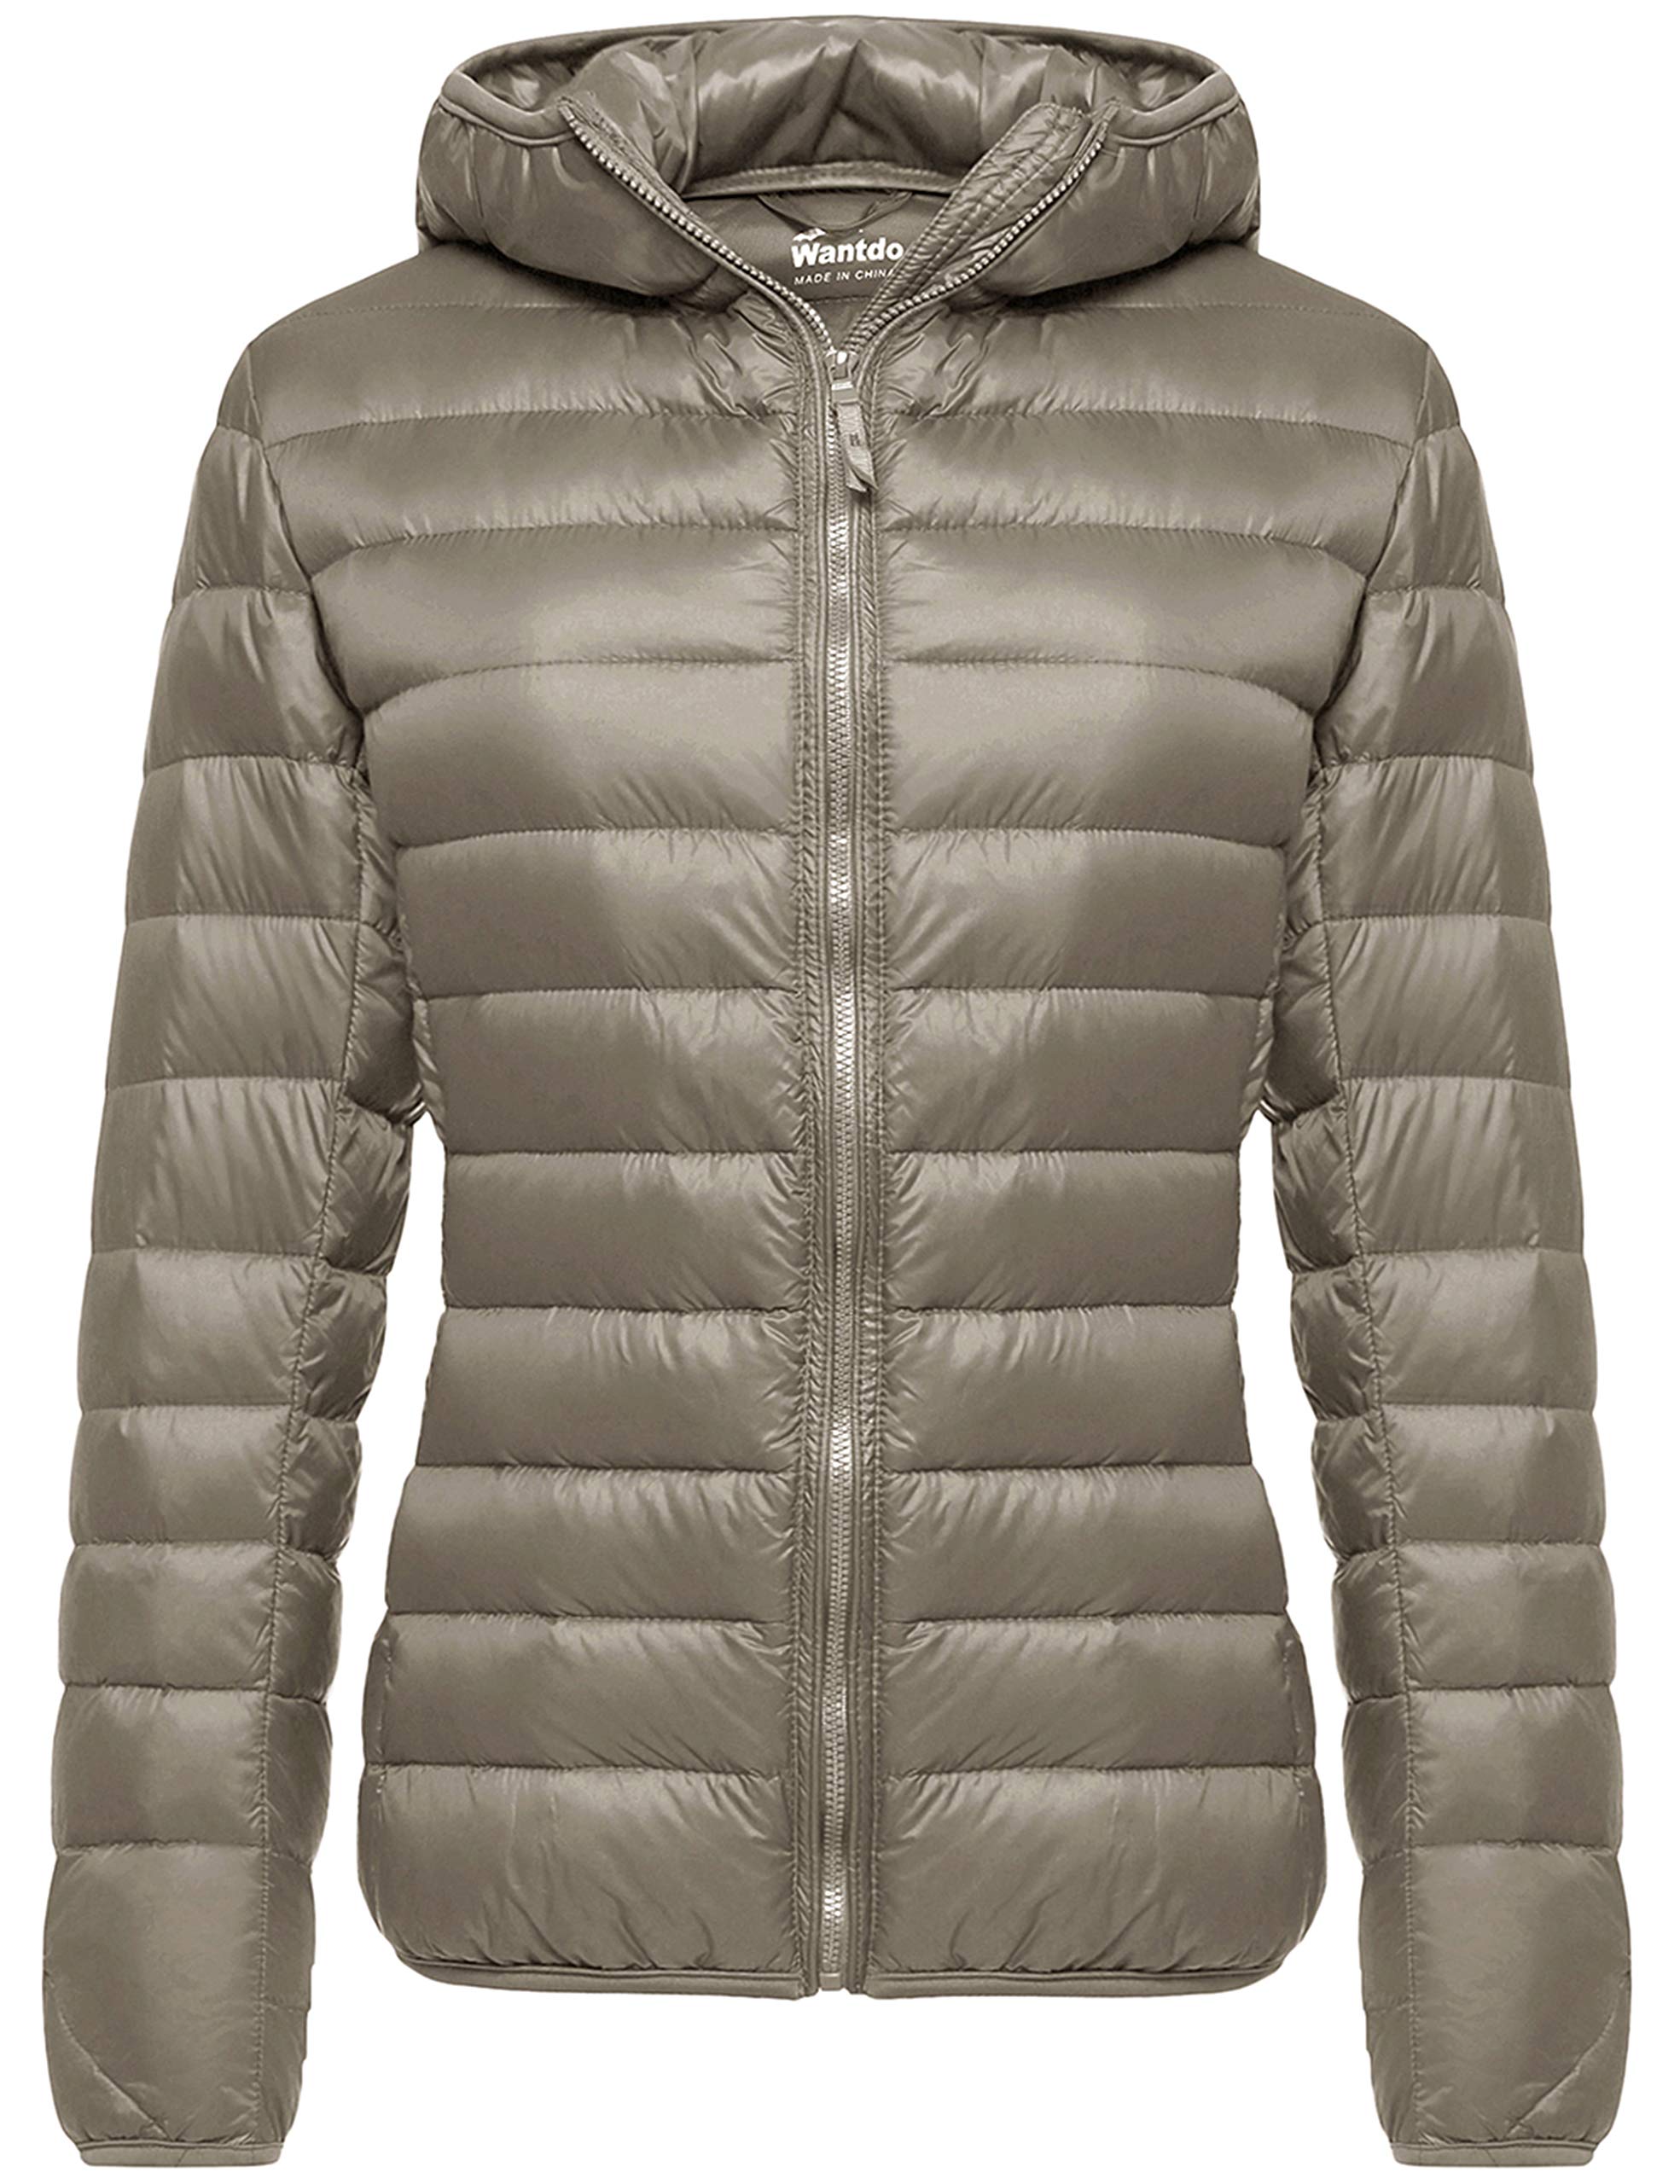 Wantdo Womens Down Jacket Winter Packable Warm Light Short Coat Khaki X-Large